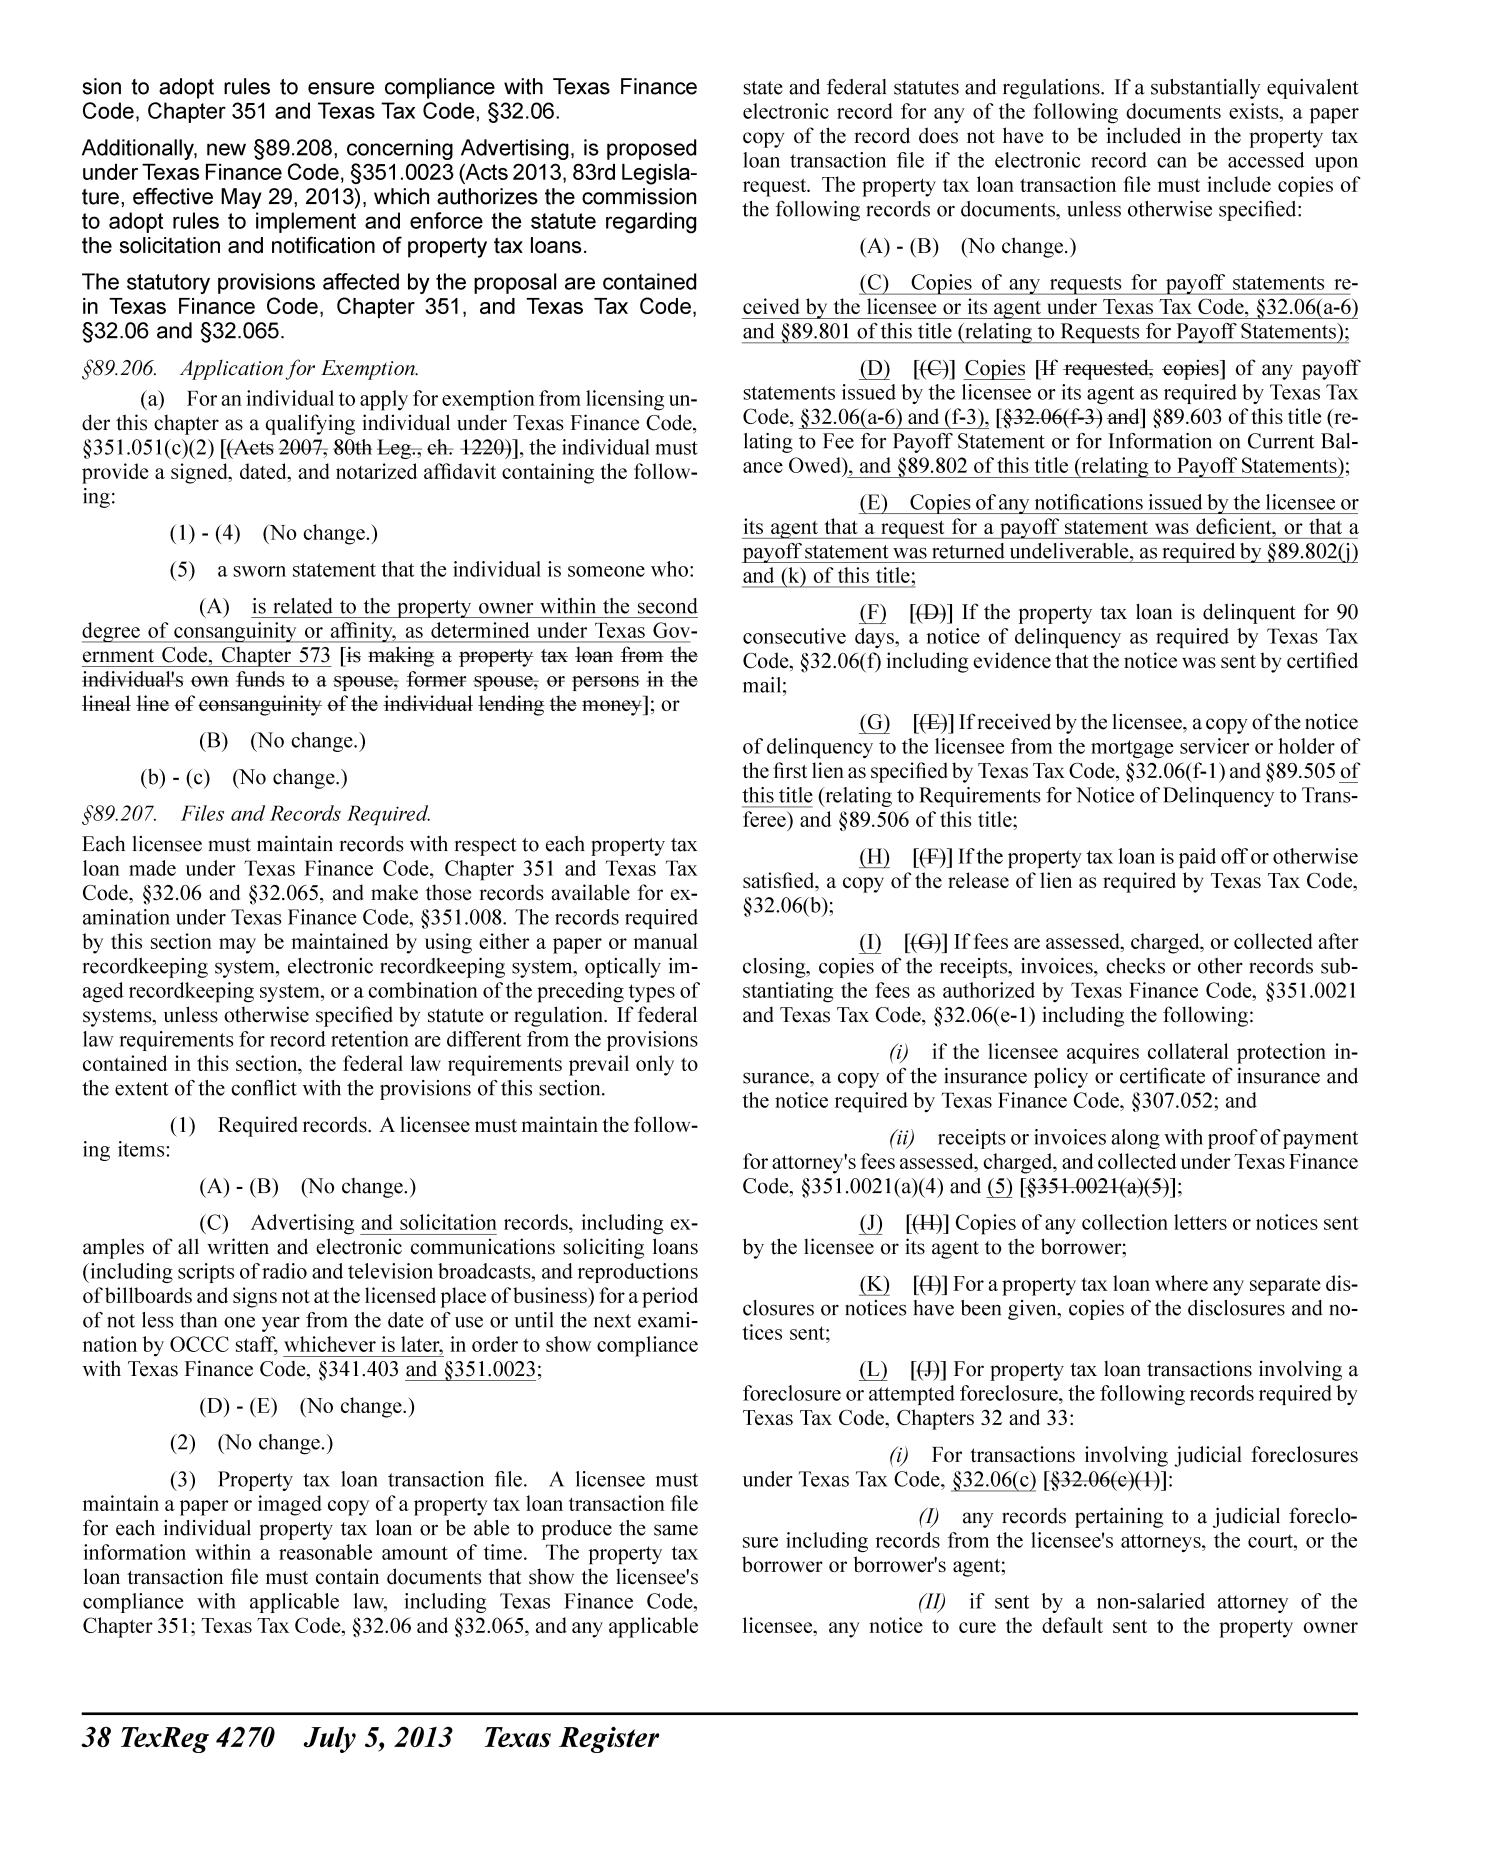 Texas Register, Volume 38, Number 27, Pages 4243-4444, July 5, 2013
                                                
                                                    4270
                                                